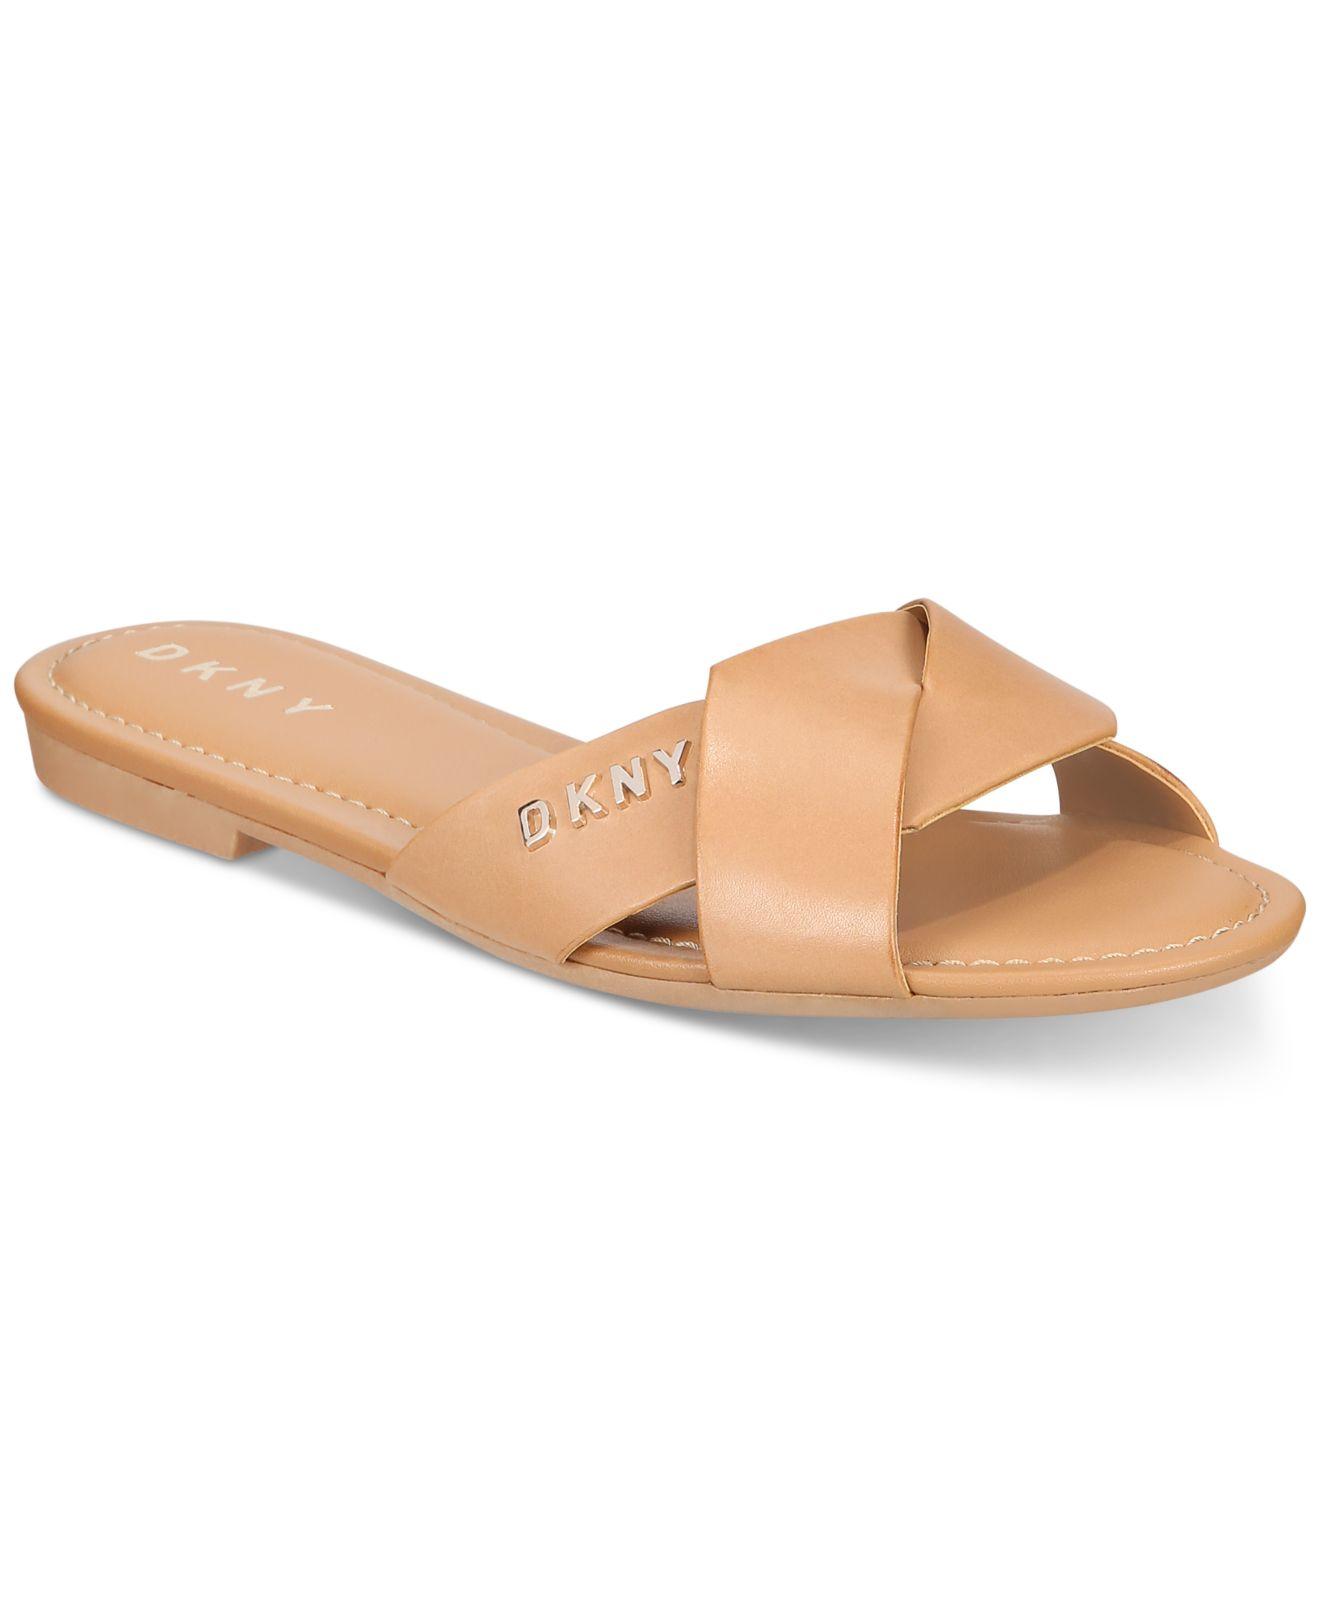 DKNY Kiara Flat Sandals, Created For Macy's - Lyst